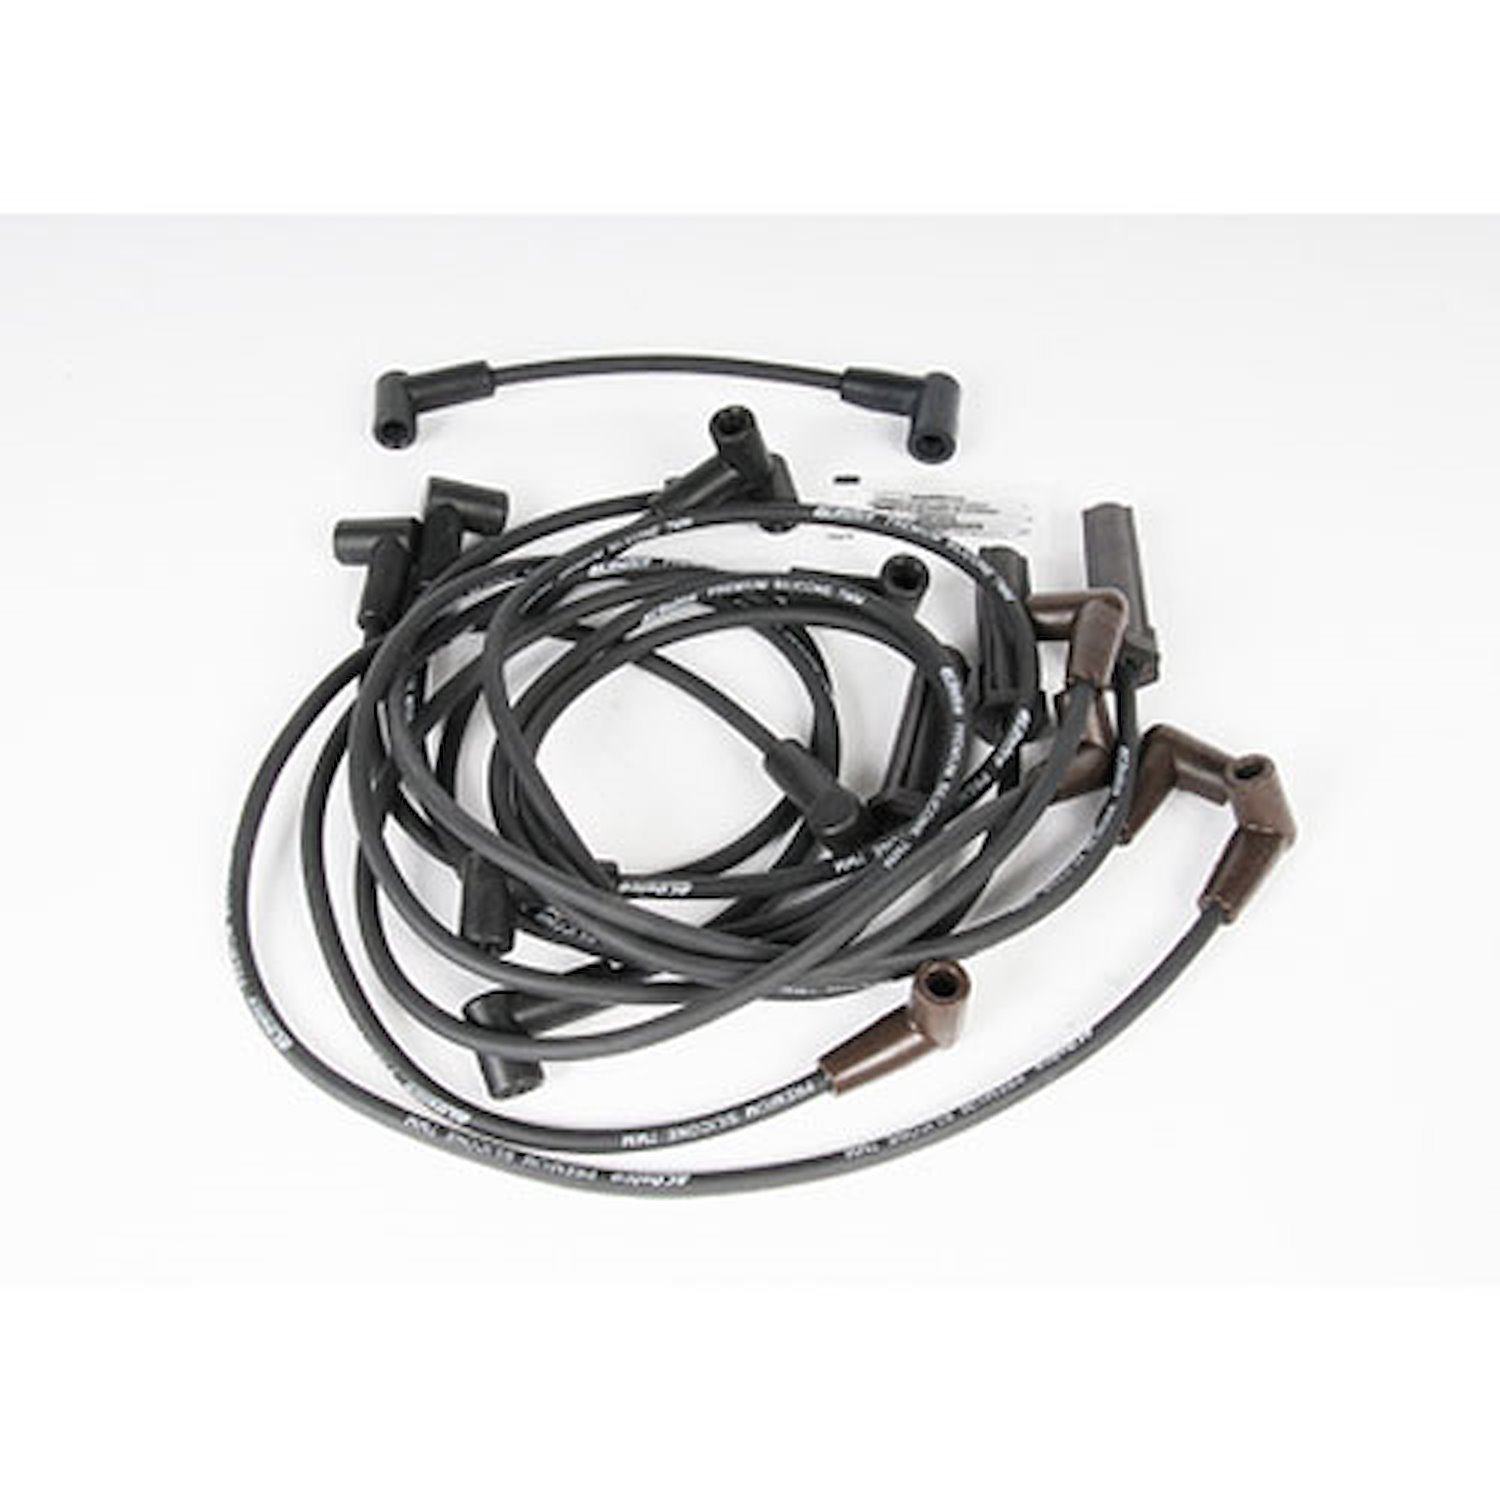 Spark Plug Wire Kit for Select 1989-1993 Buick, Cadillac, Chevrolet, Oldsmobile, Pontiac